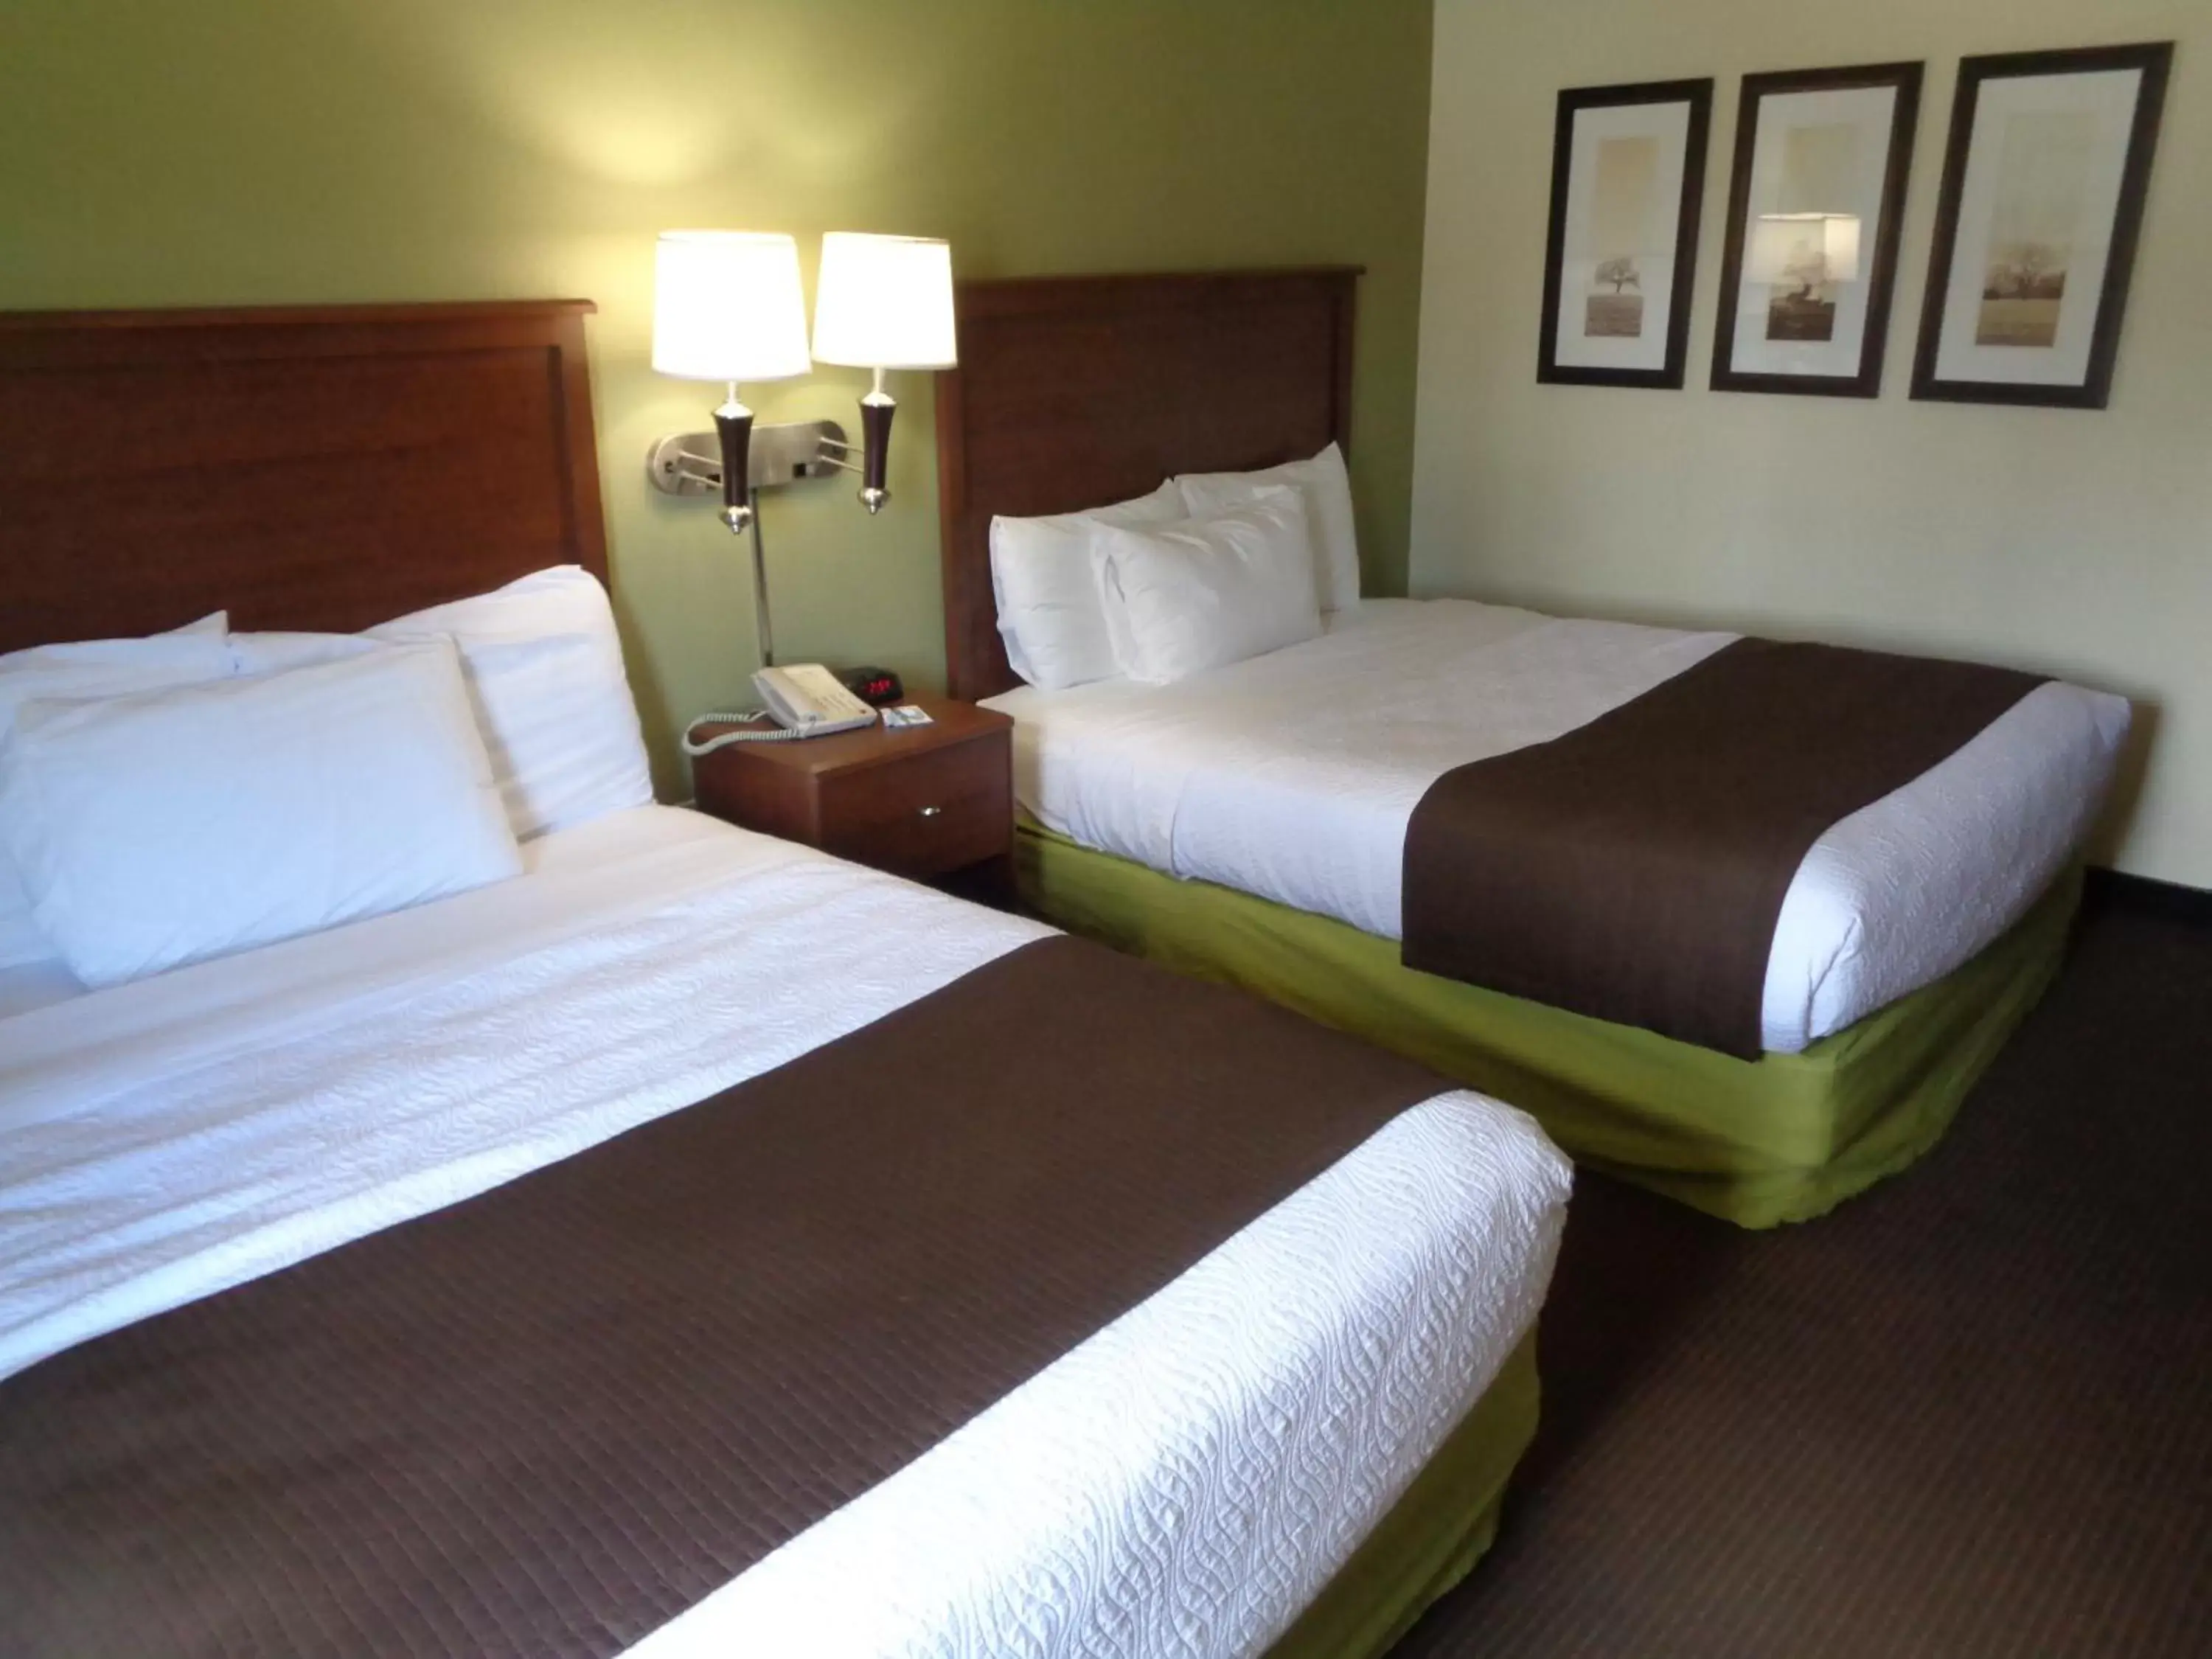 Bed in AmericInn by Wyndham Grand Rapids